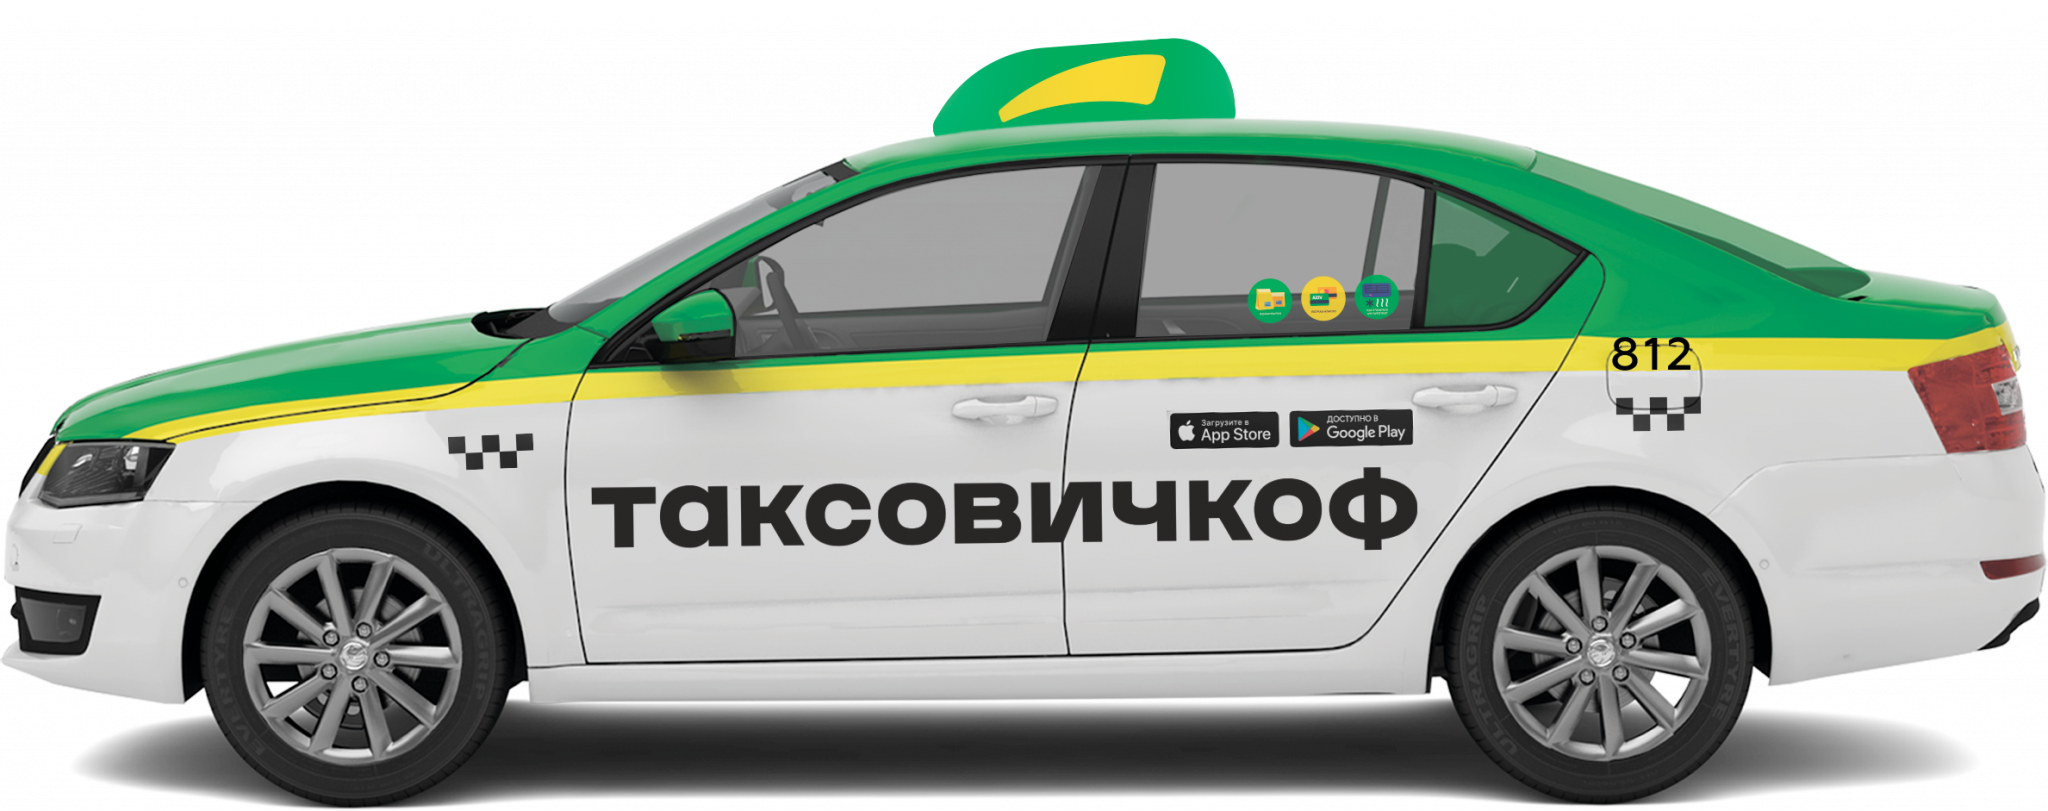 Такси хвойная. Таксовичкоф333-00-00. Таксовичкоф машины. Таксовичкоф логотип. Логотип такси Таксовичкоф.